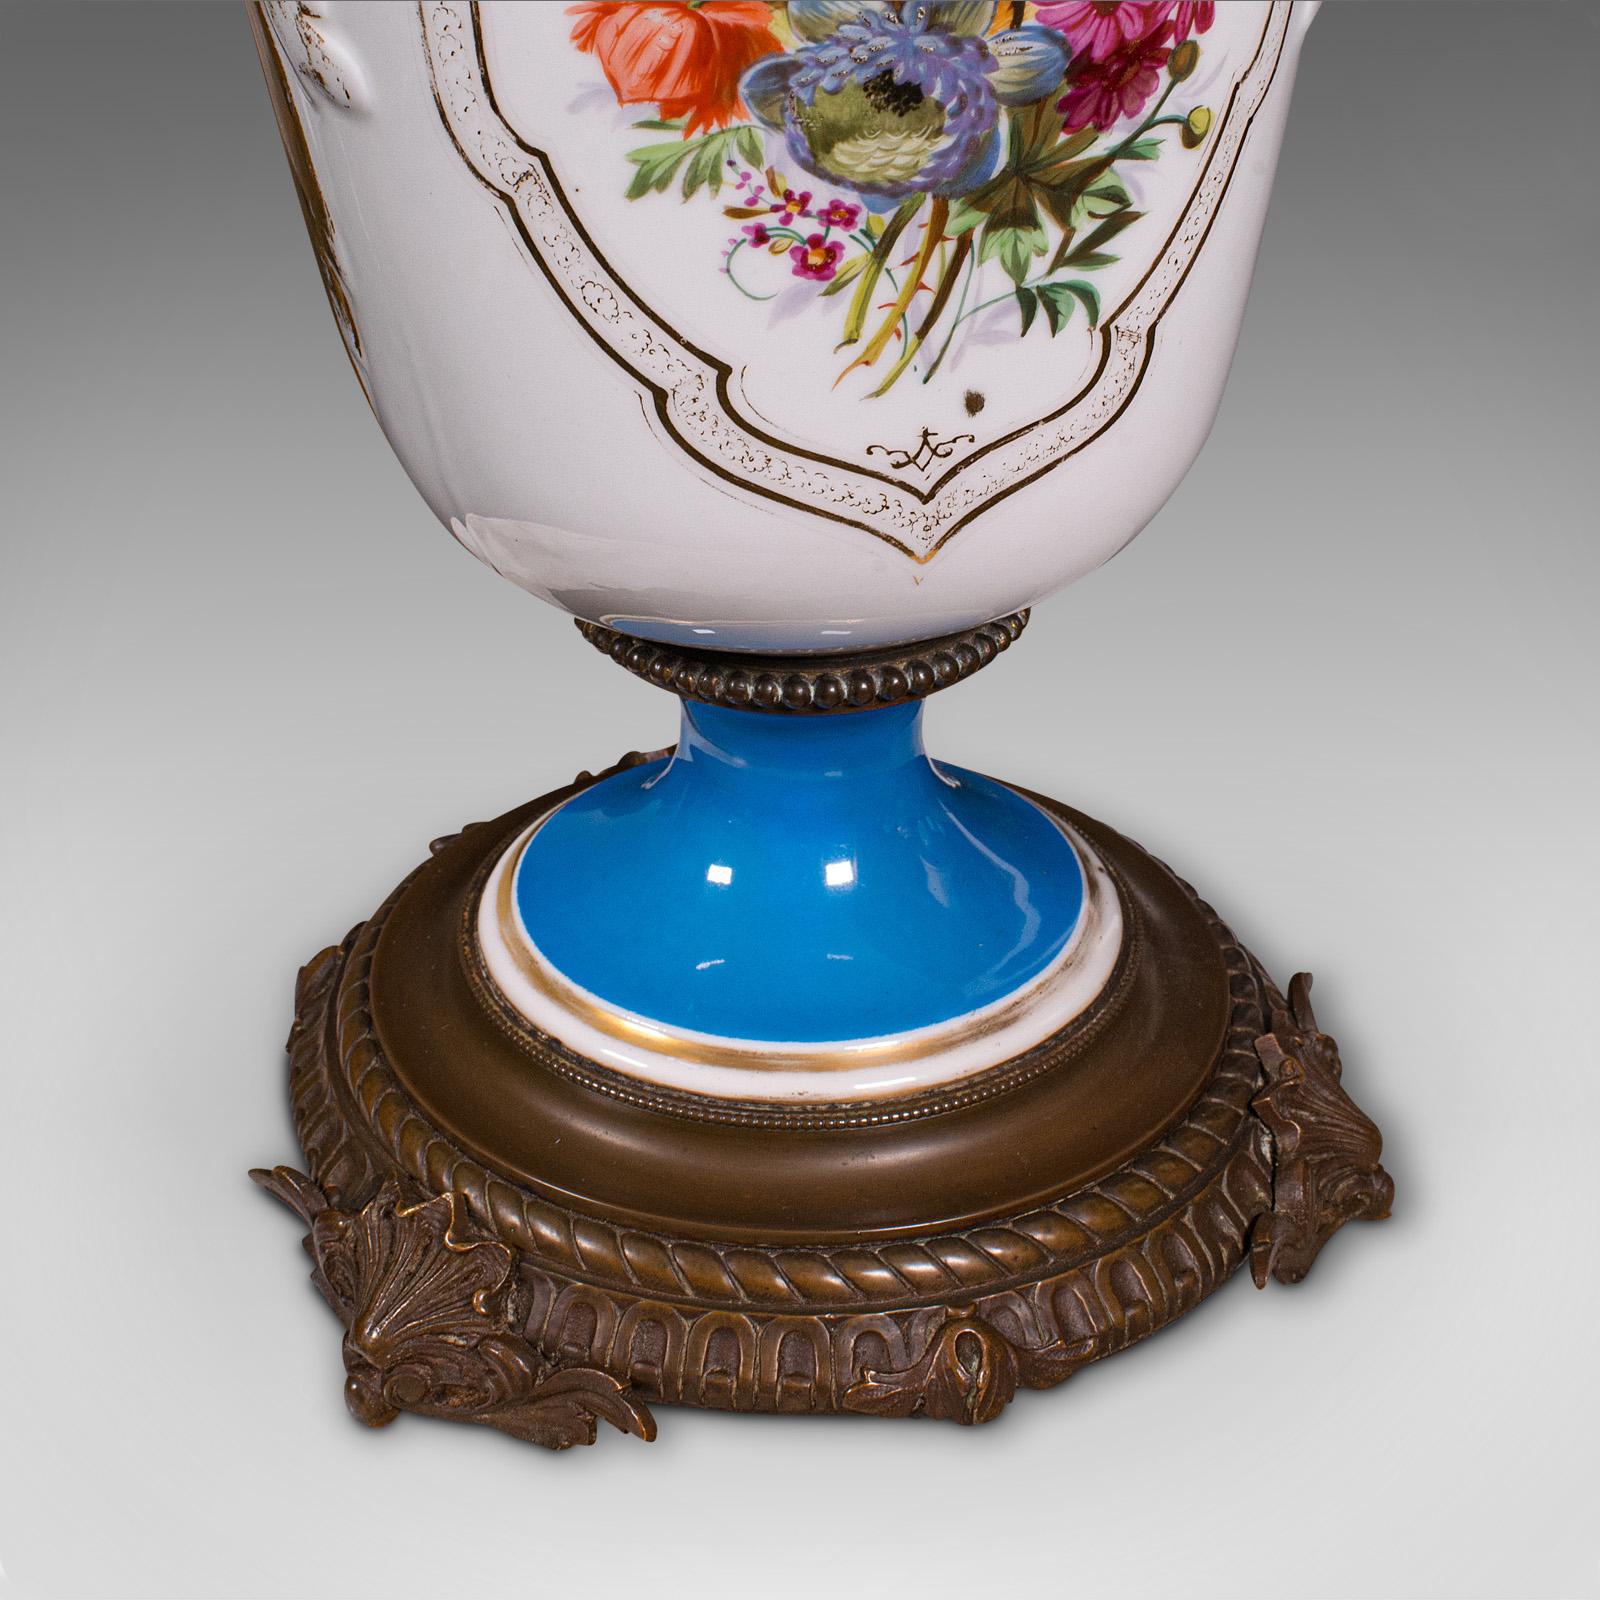 Antique Decorative Jardiniere, French, Ceramic, Display Planter, Vase, Victorian For Sale 7